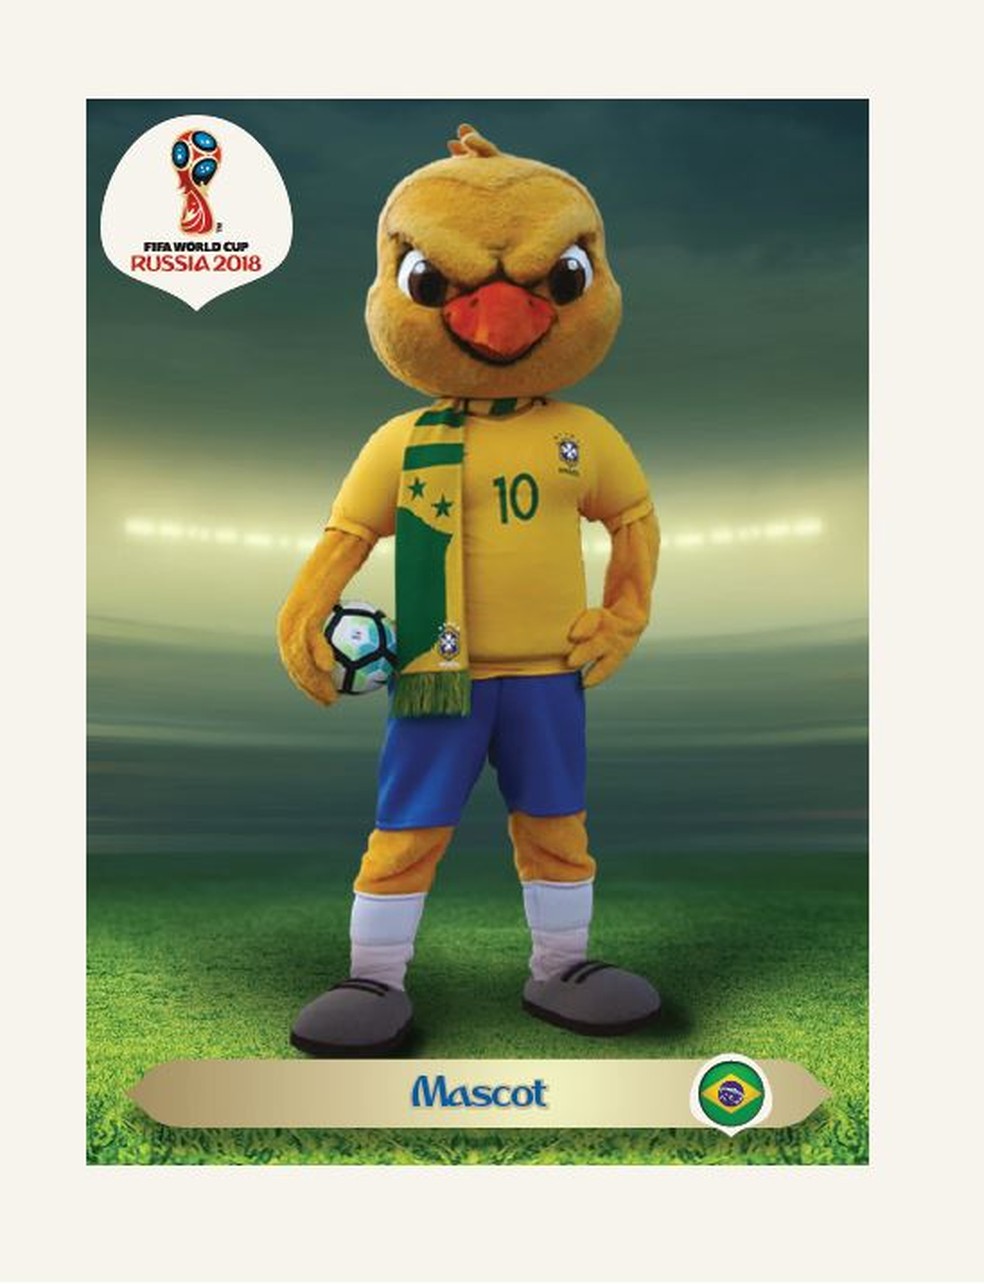 Figurinhas do Fortaleza  Leão - Apps on Google Play